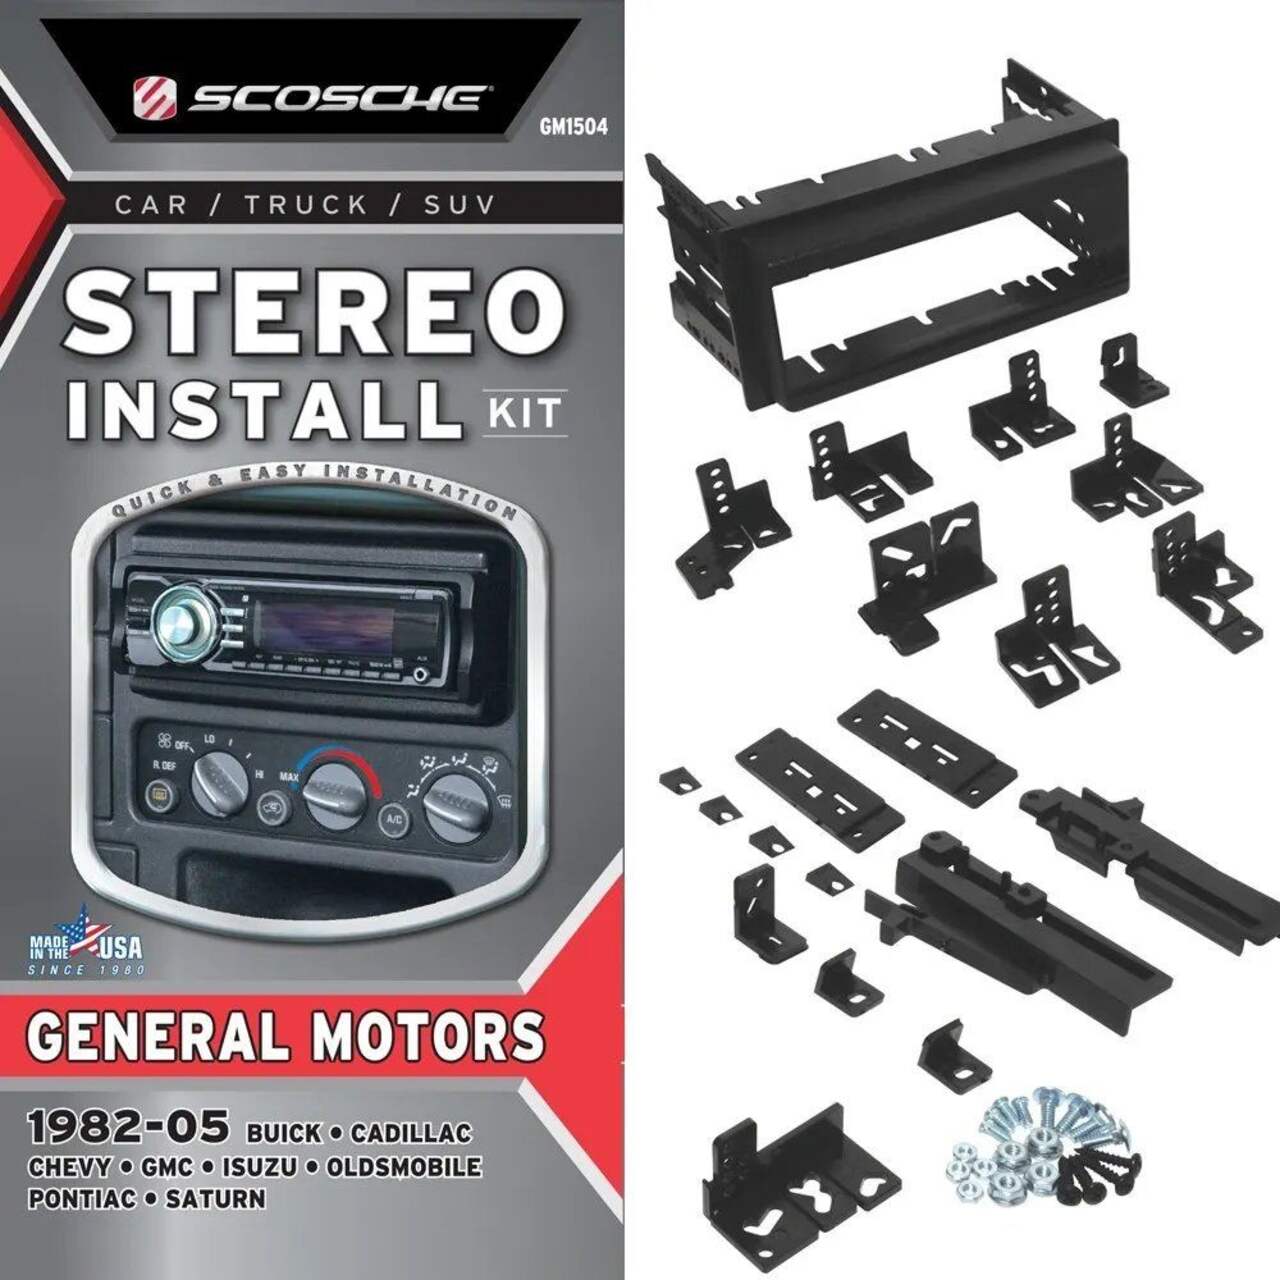 Scosche GM1504 Dash Install Kit for 1982-2005 GM Vehicles